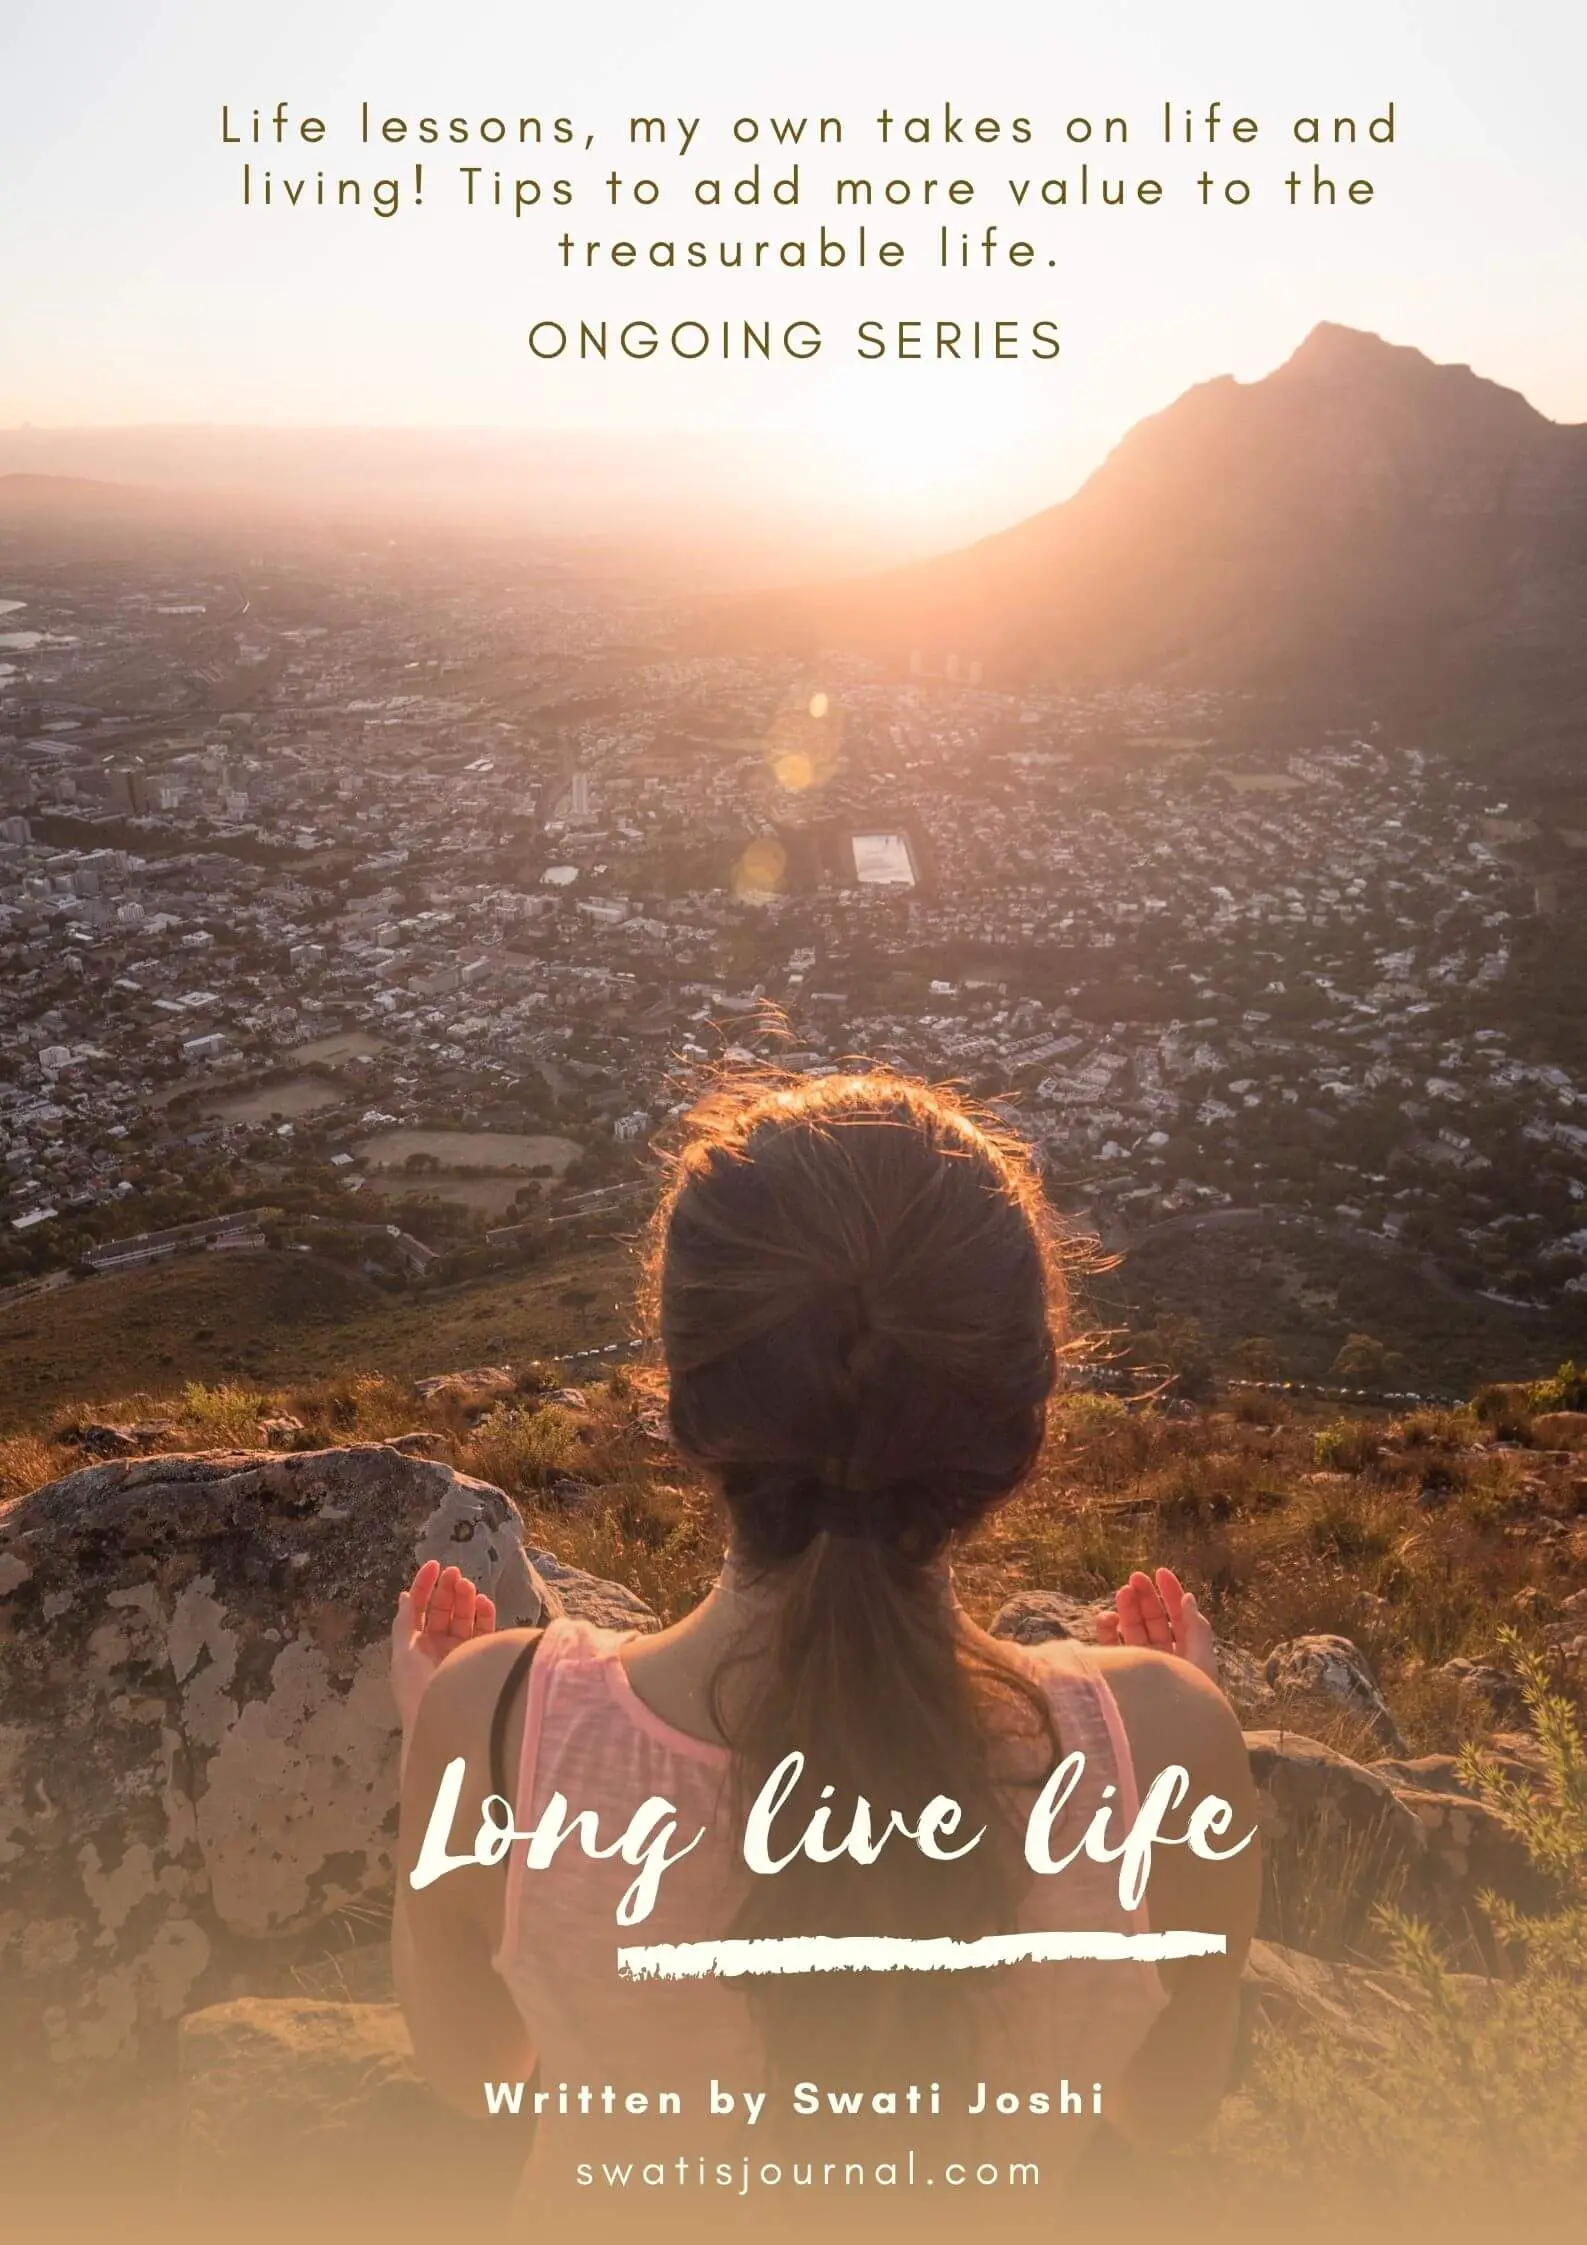 long live life poster - swati's Journal short story